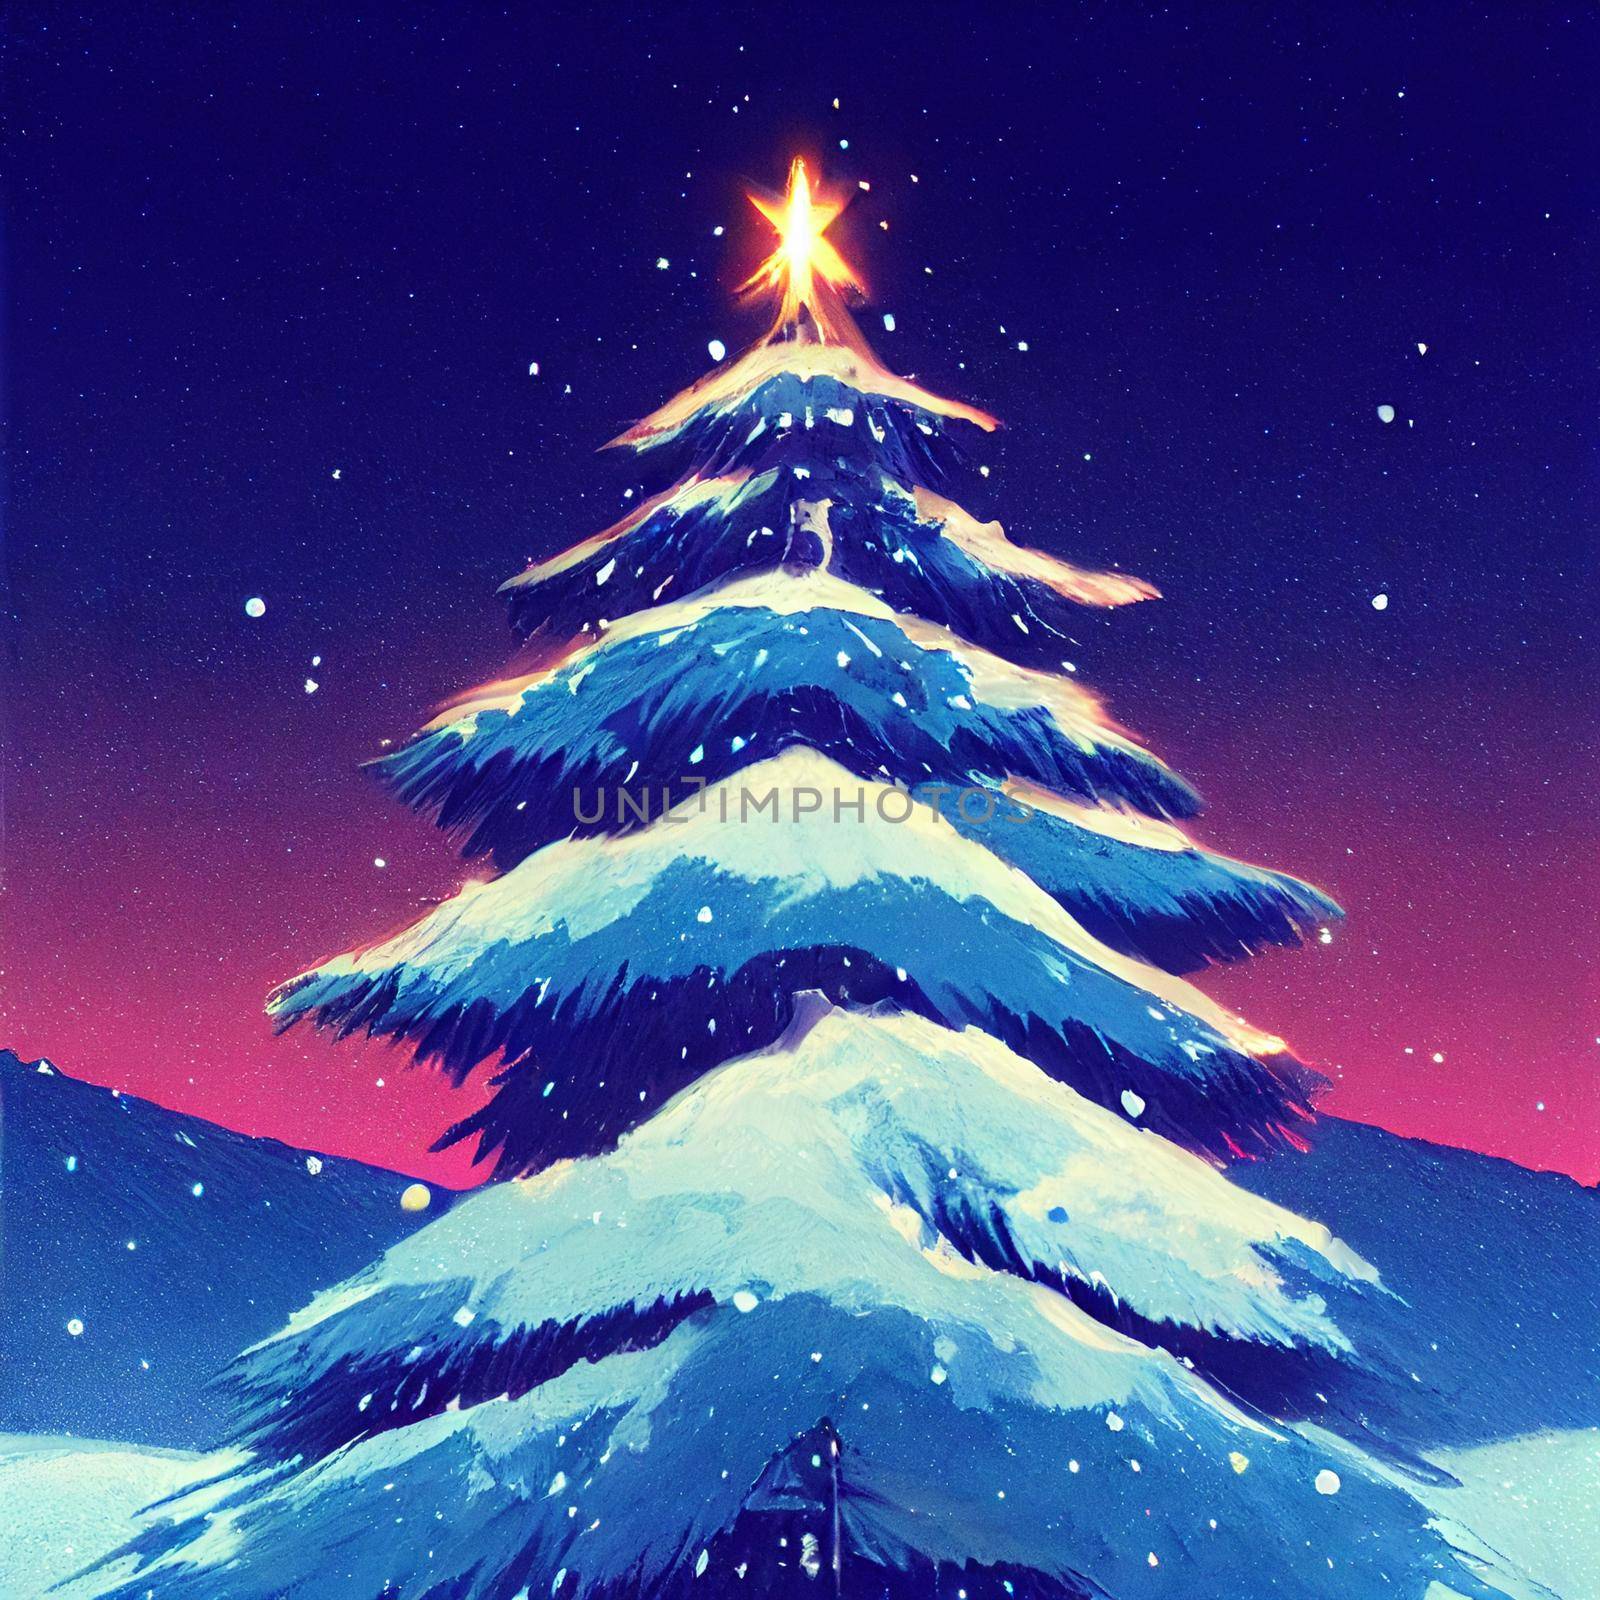 Colorful christmas tree illustration. High quality illustration